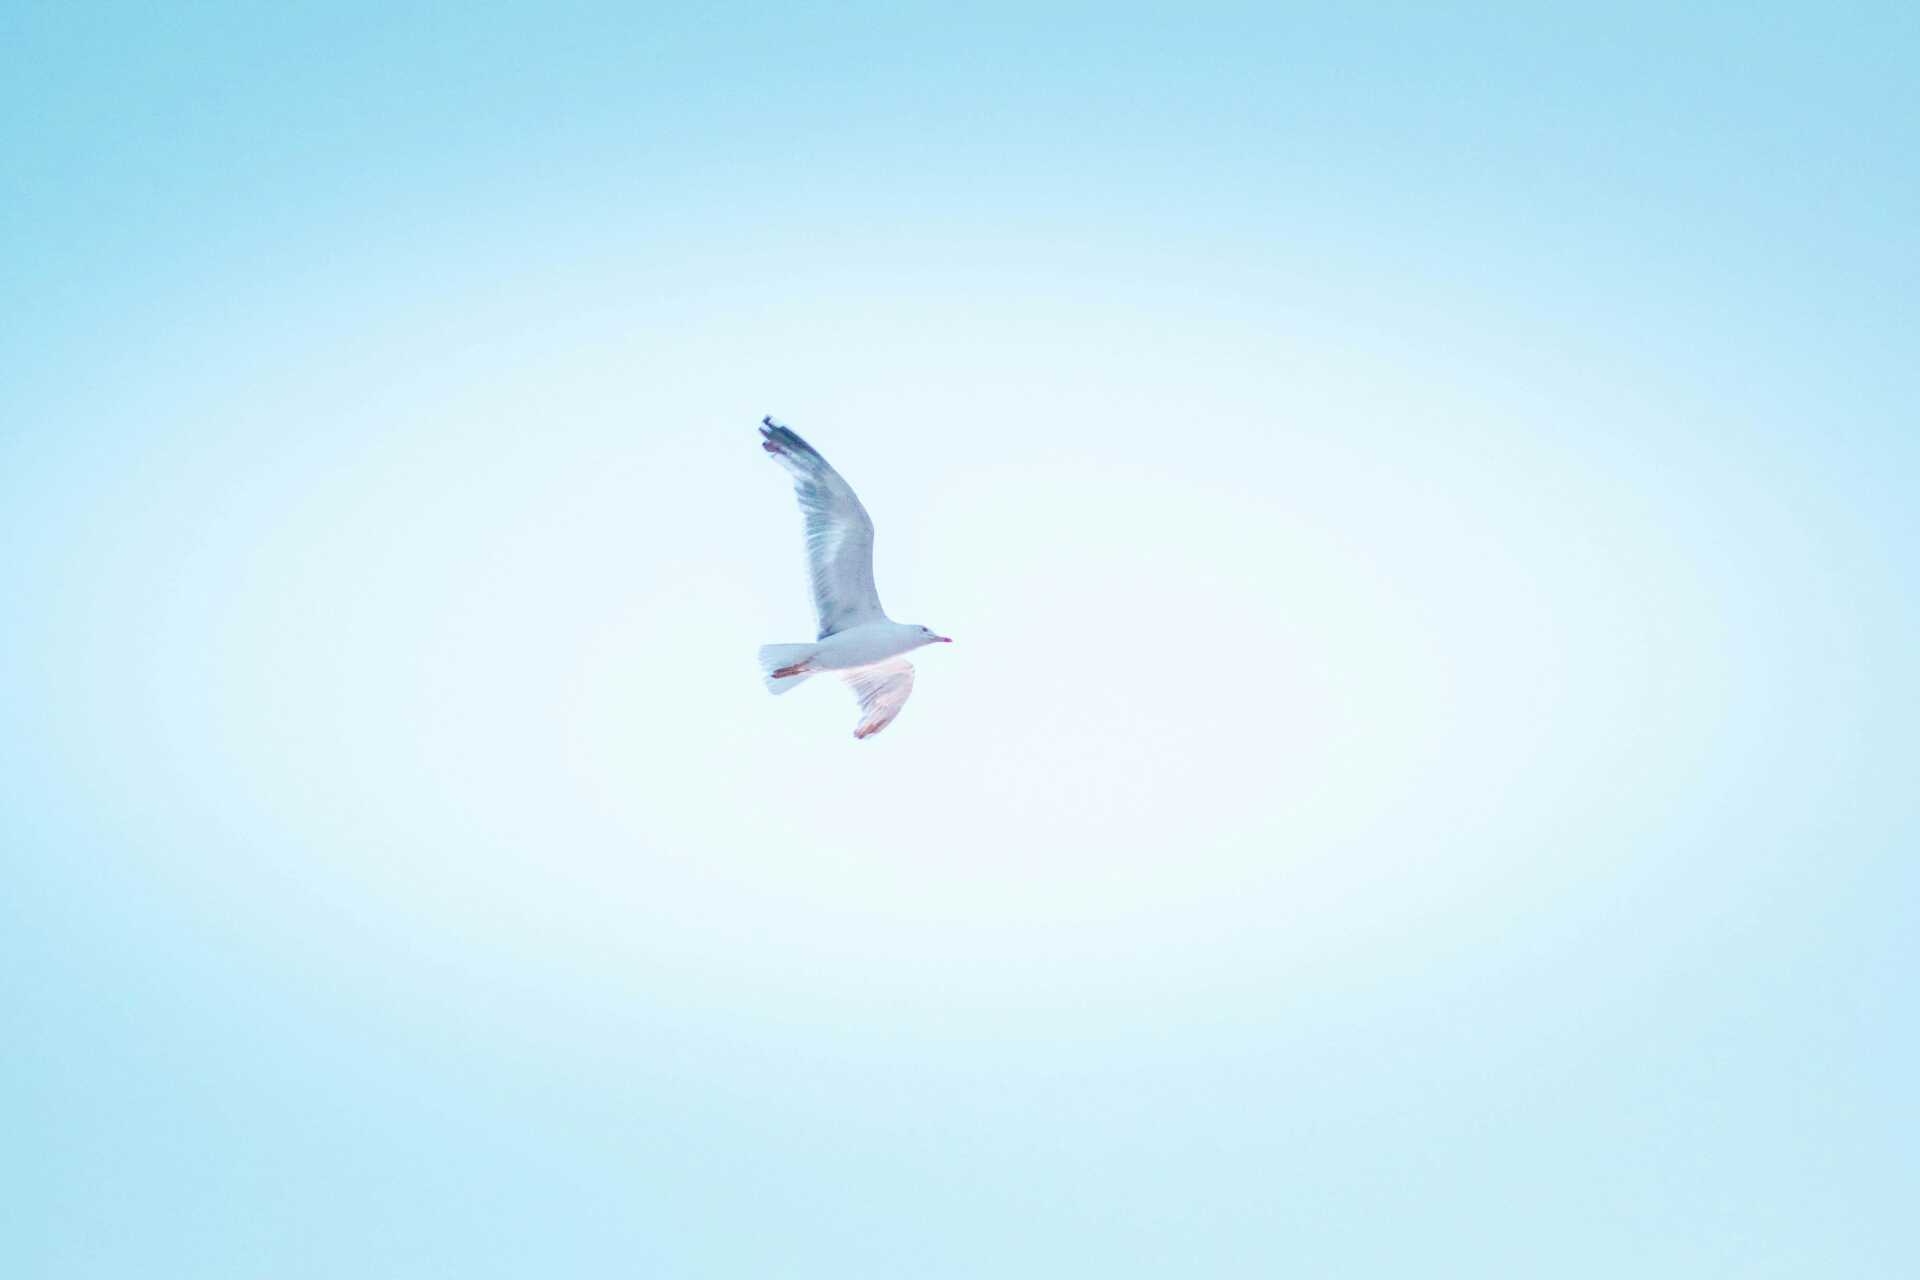 A white bird flies high in a bright blue sky